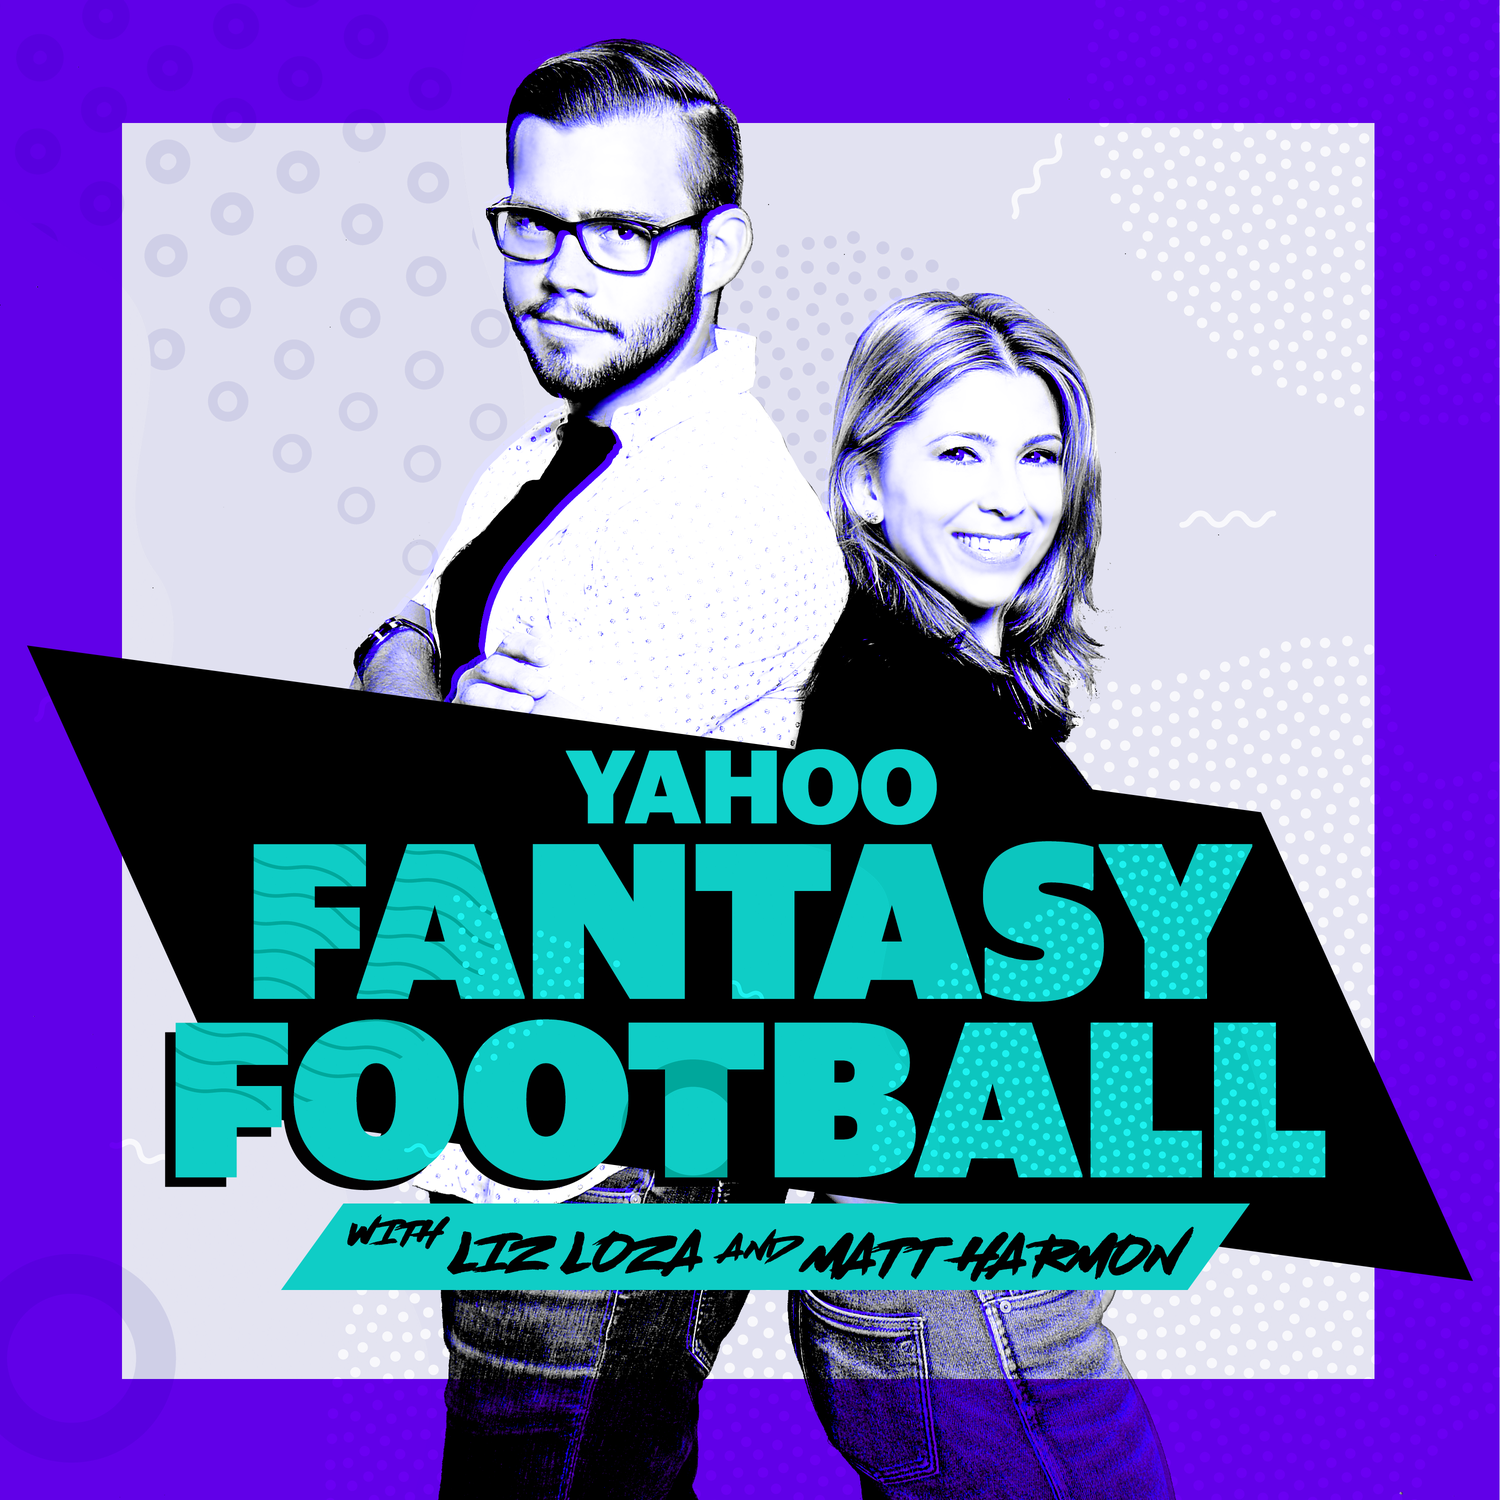 The Yahoo Fantasy Football Podcast Listen via Stitcher for Podcasts